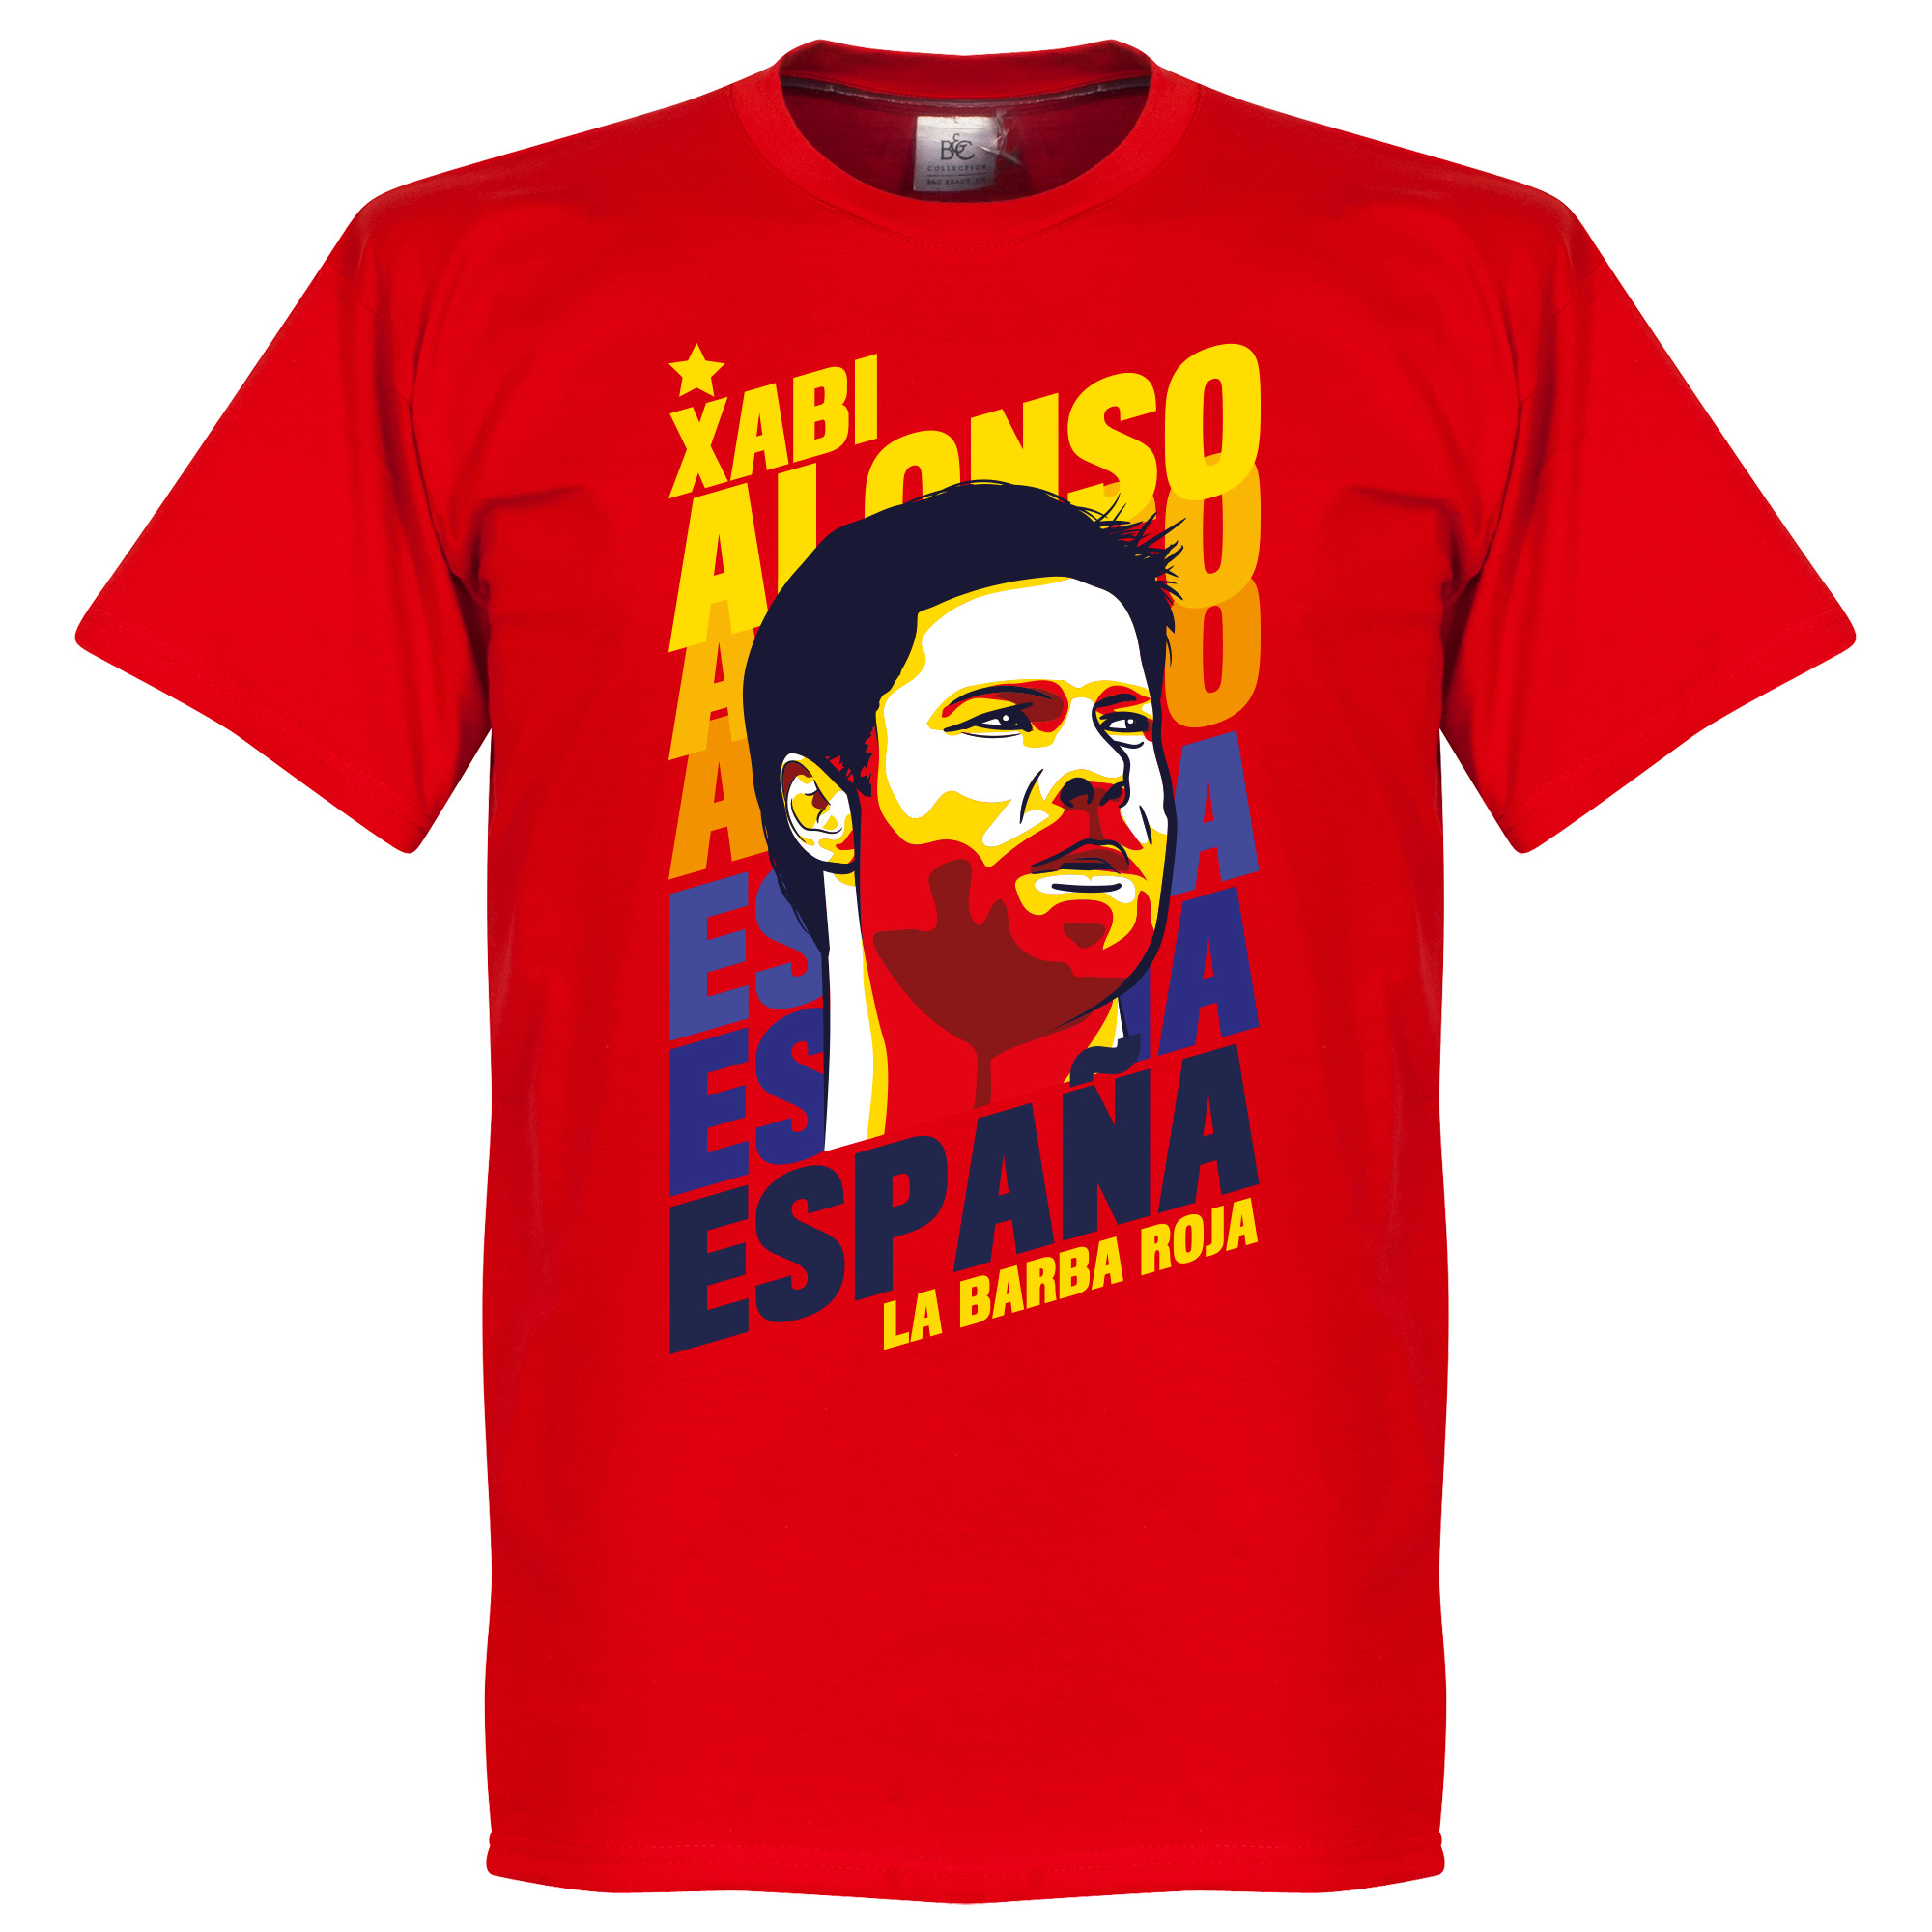 Xabi Alonso Portrait T-Shirt Top Merken Winkel